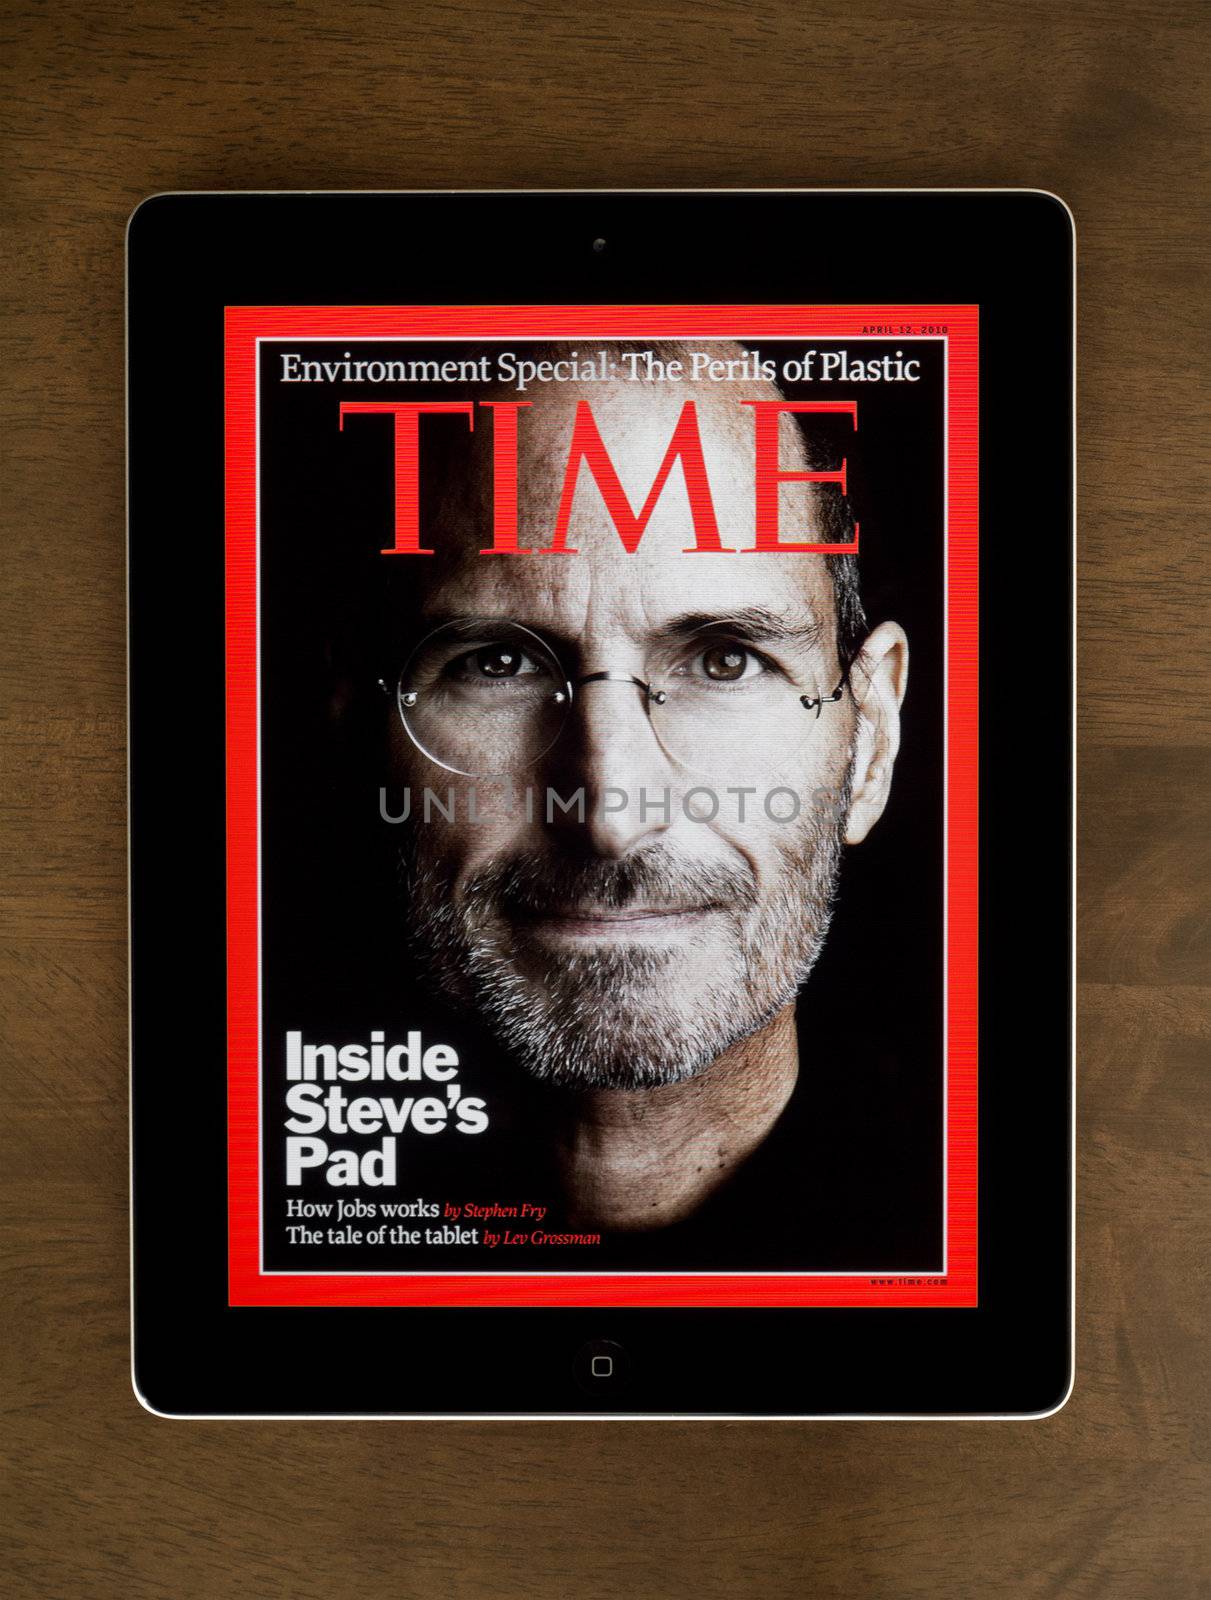 Steve Jobs On Cover by bloomua